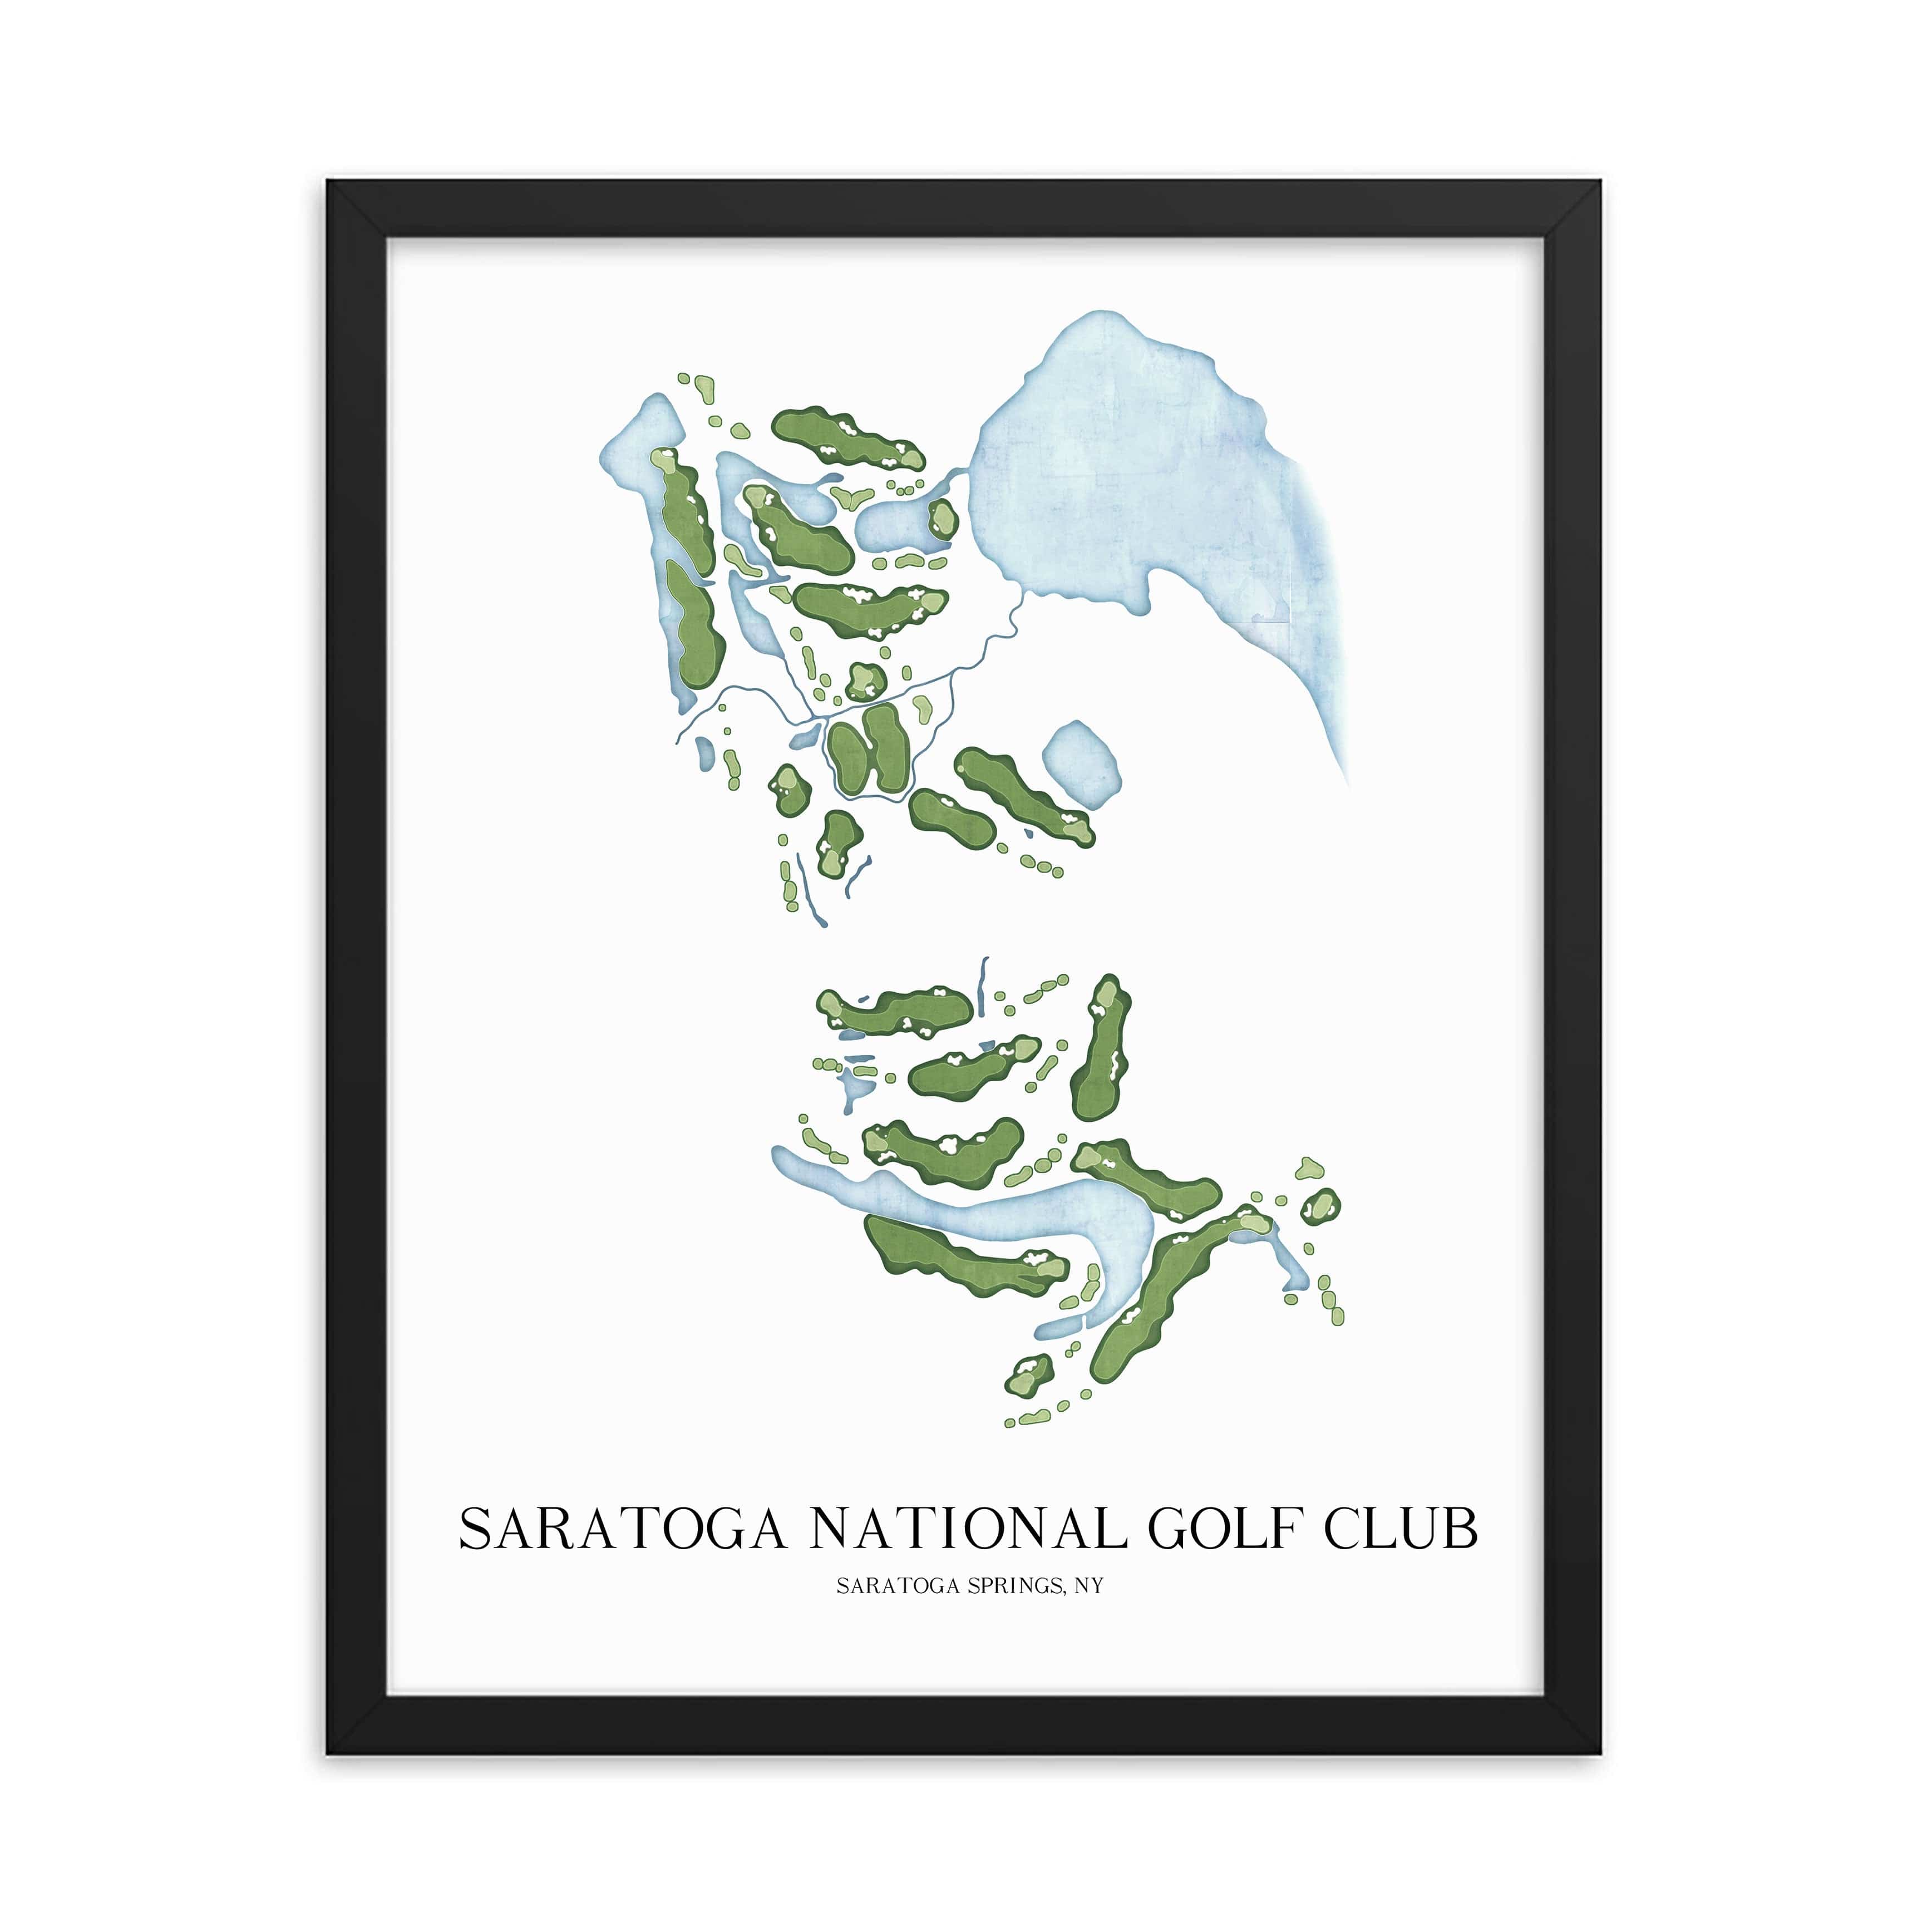 The 19th Hole Golf Shop - Golf Course Prints -  Saratoga National Golf Club Golf Course Map